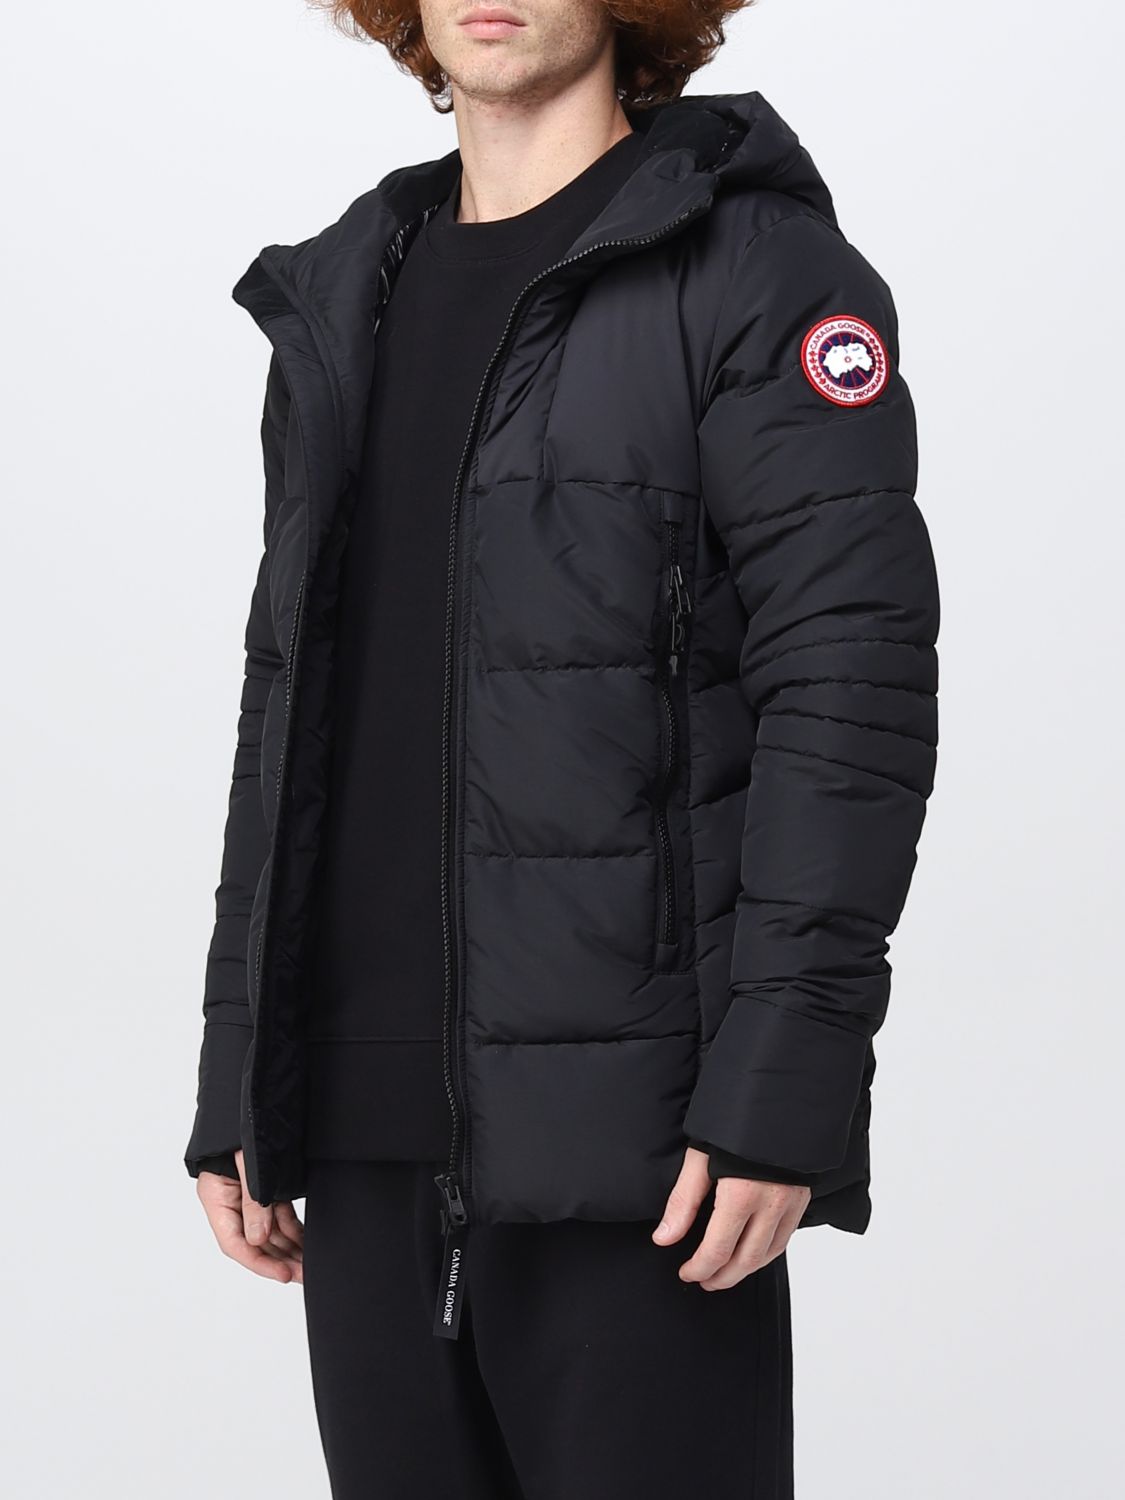 Gastvrijheid Gezicht omhoog heilig CANADA GOOSE: jacket for man - Black | Canada Goose jacket 2742M43 online  on GIGLIO.COM